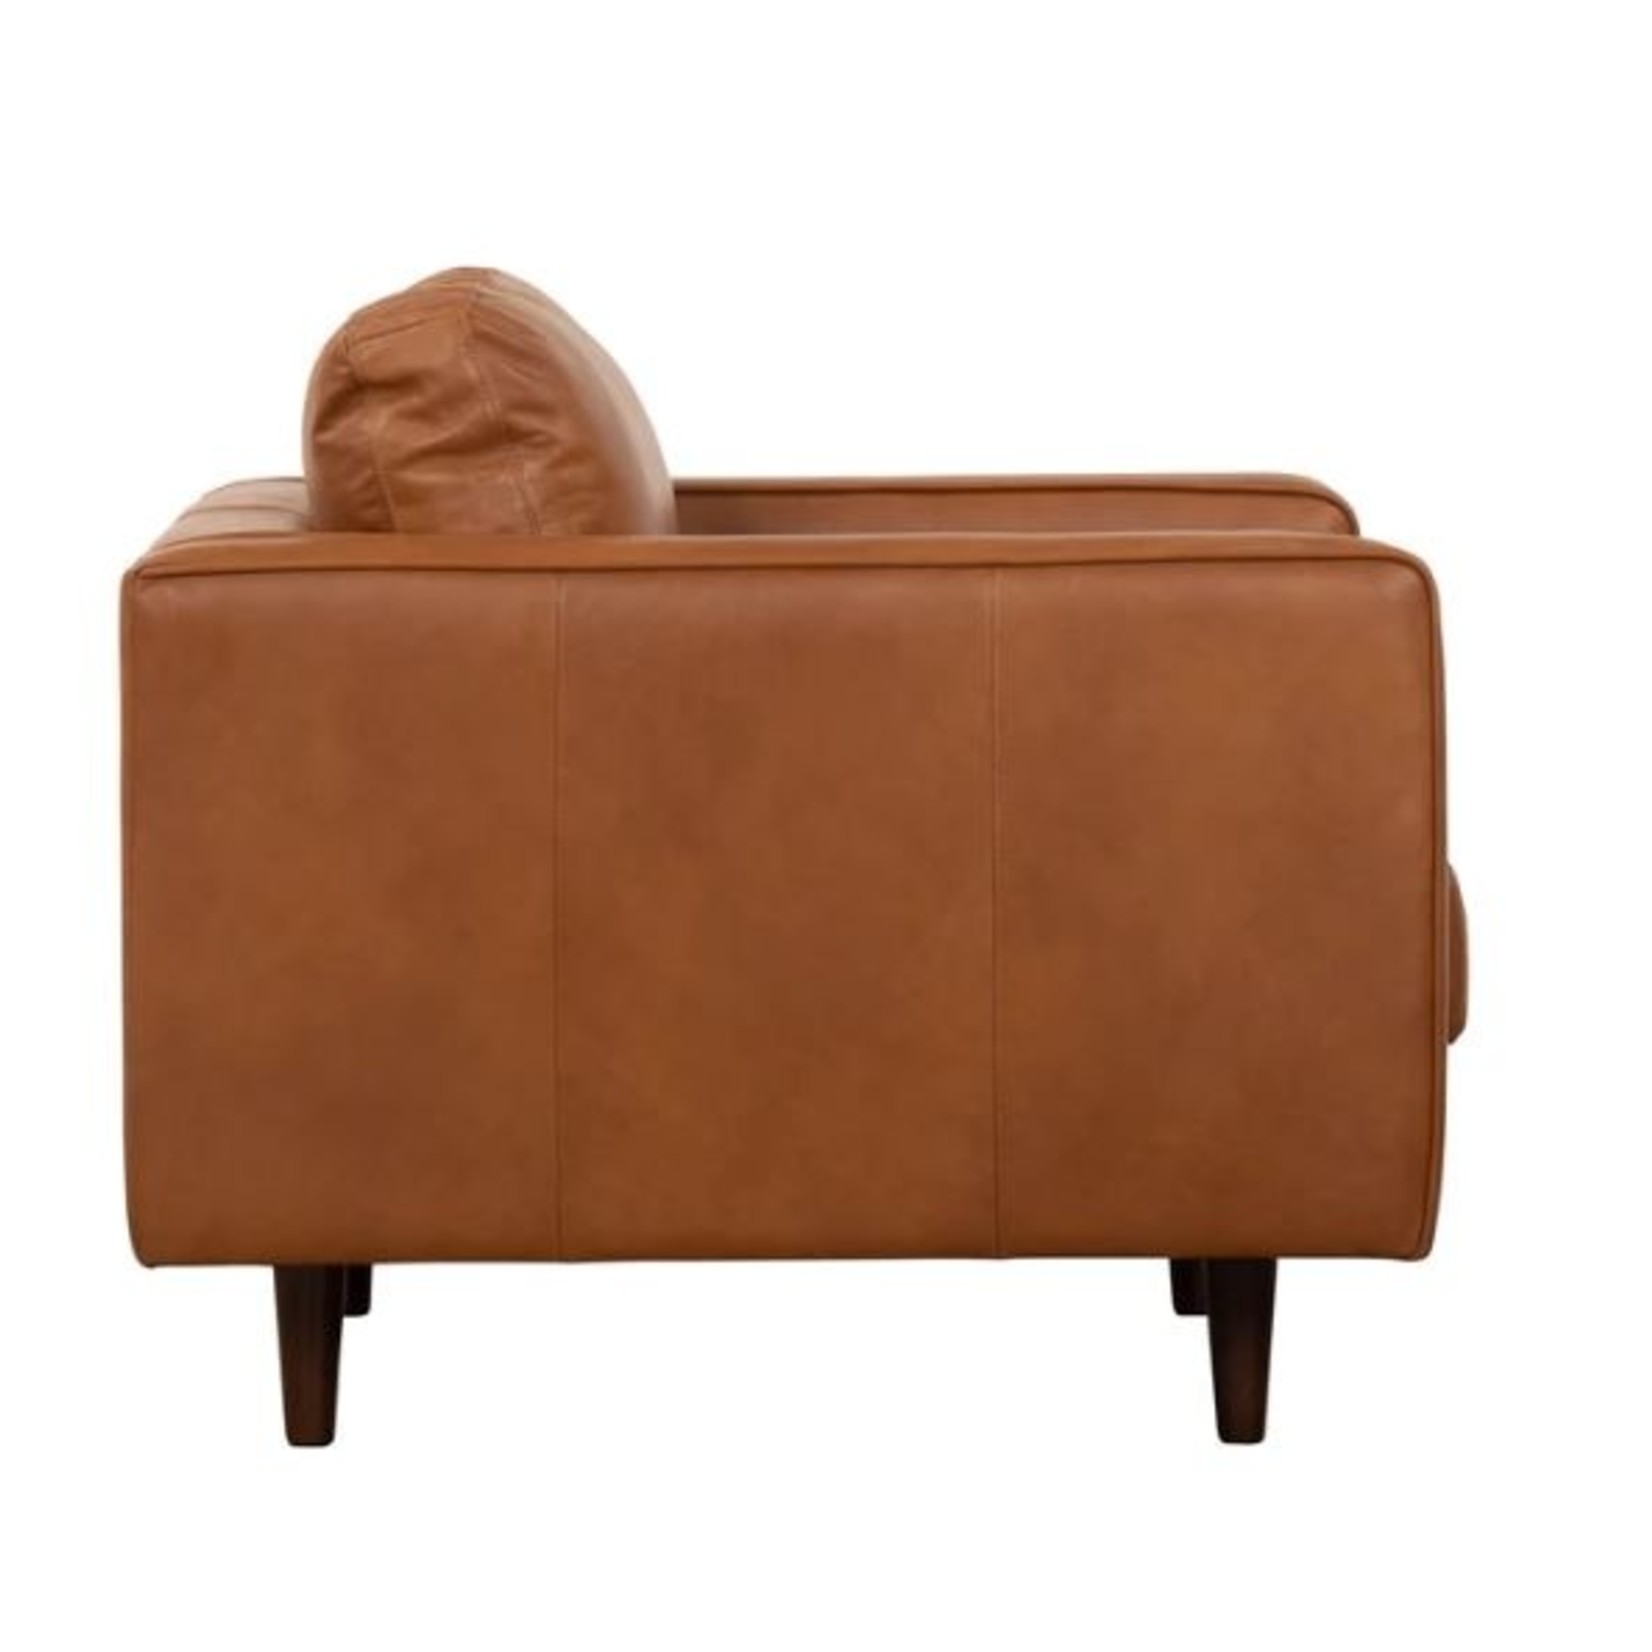 Mickler & Co. Roam Cognac Leather Chair